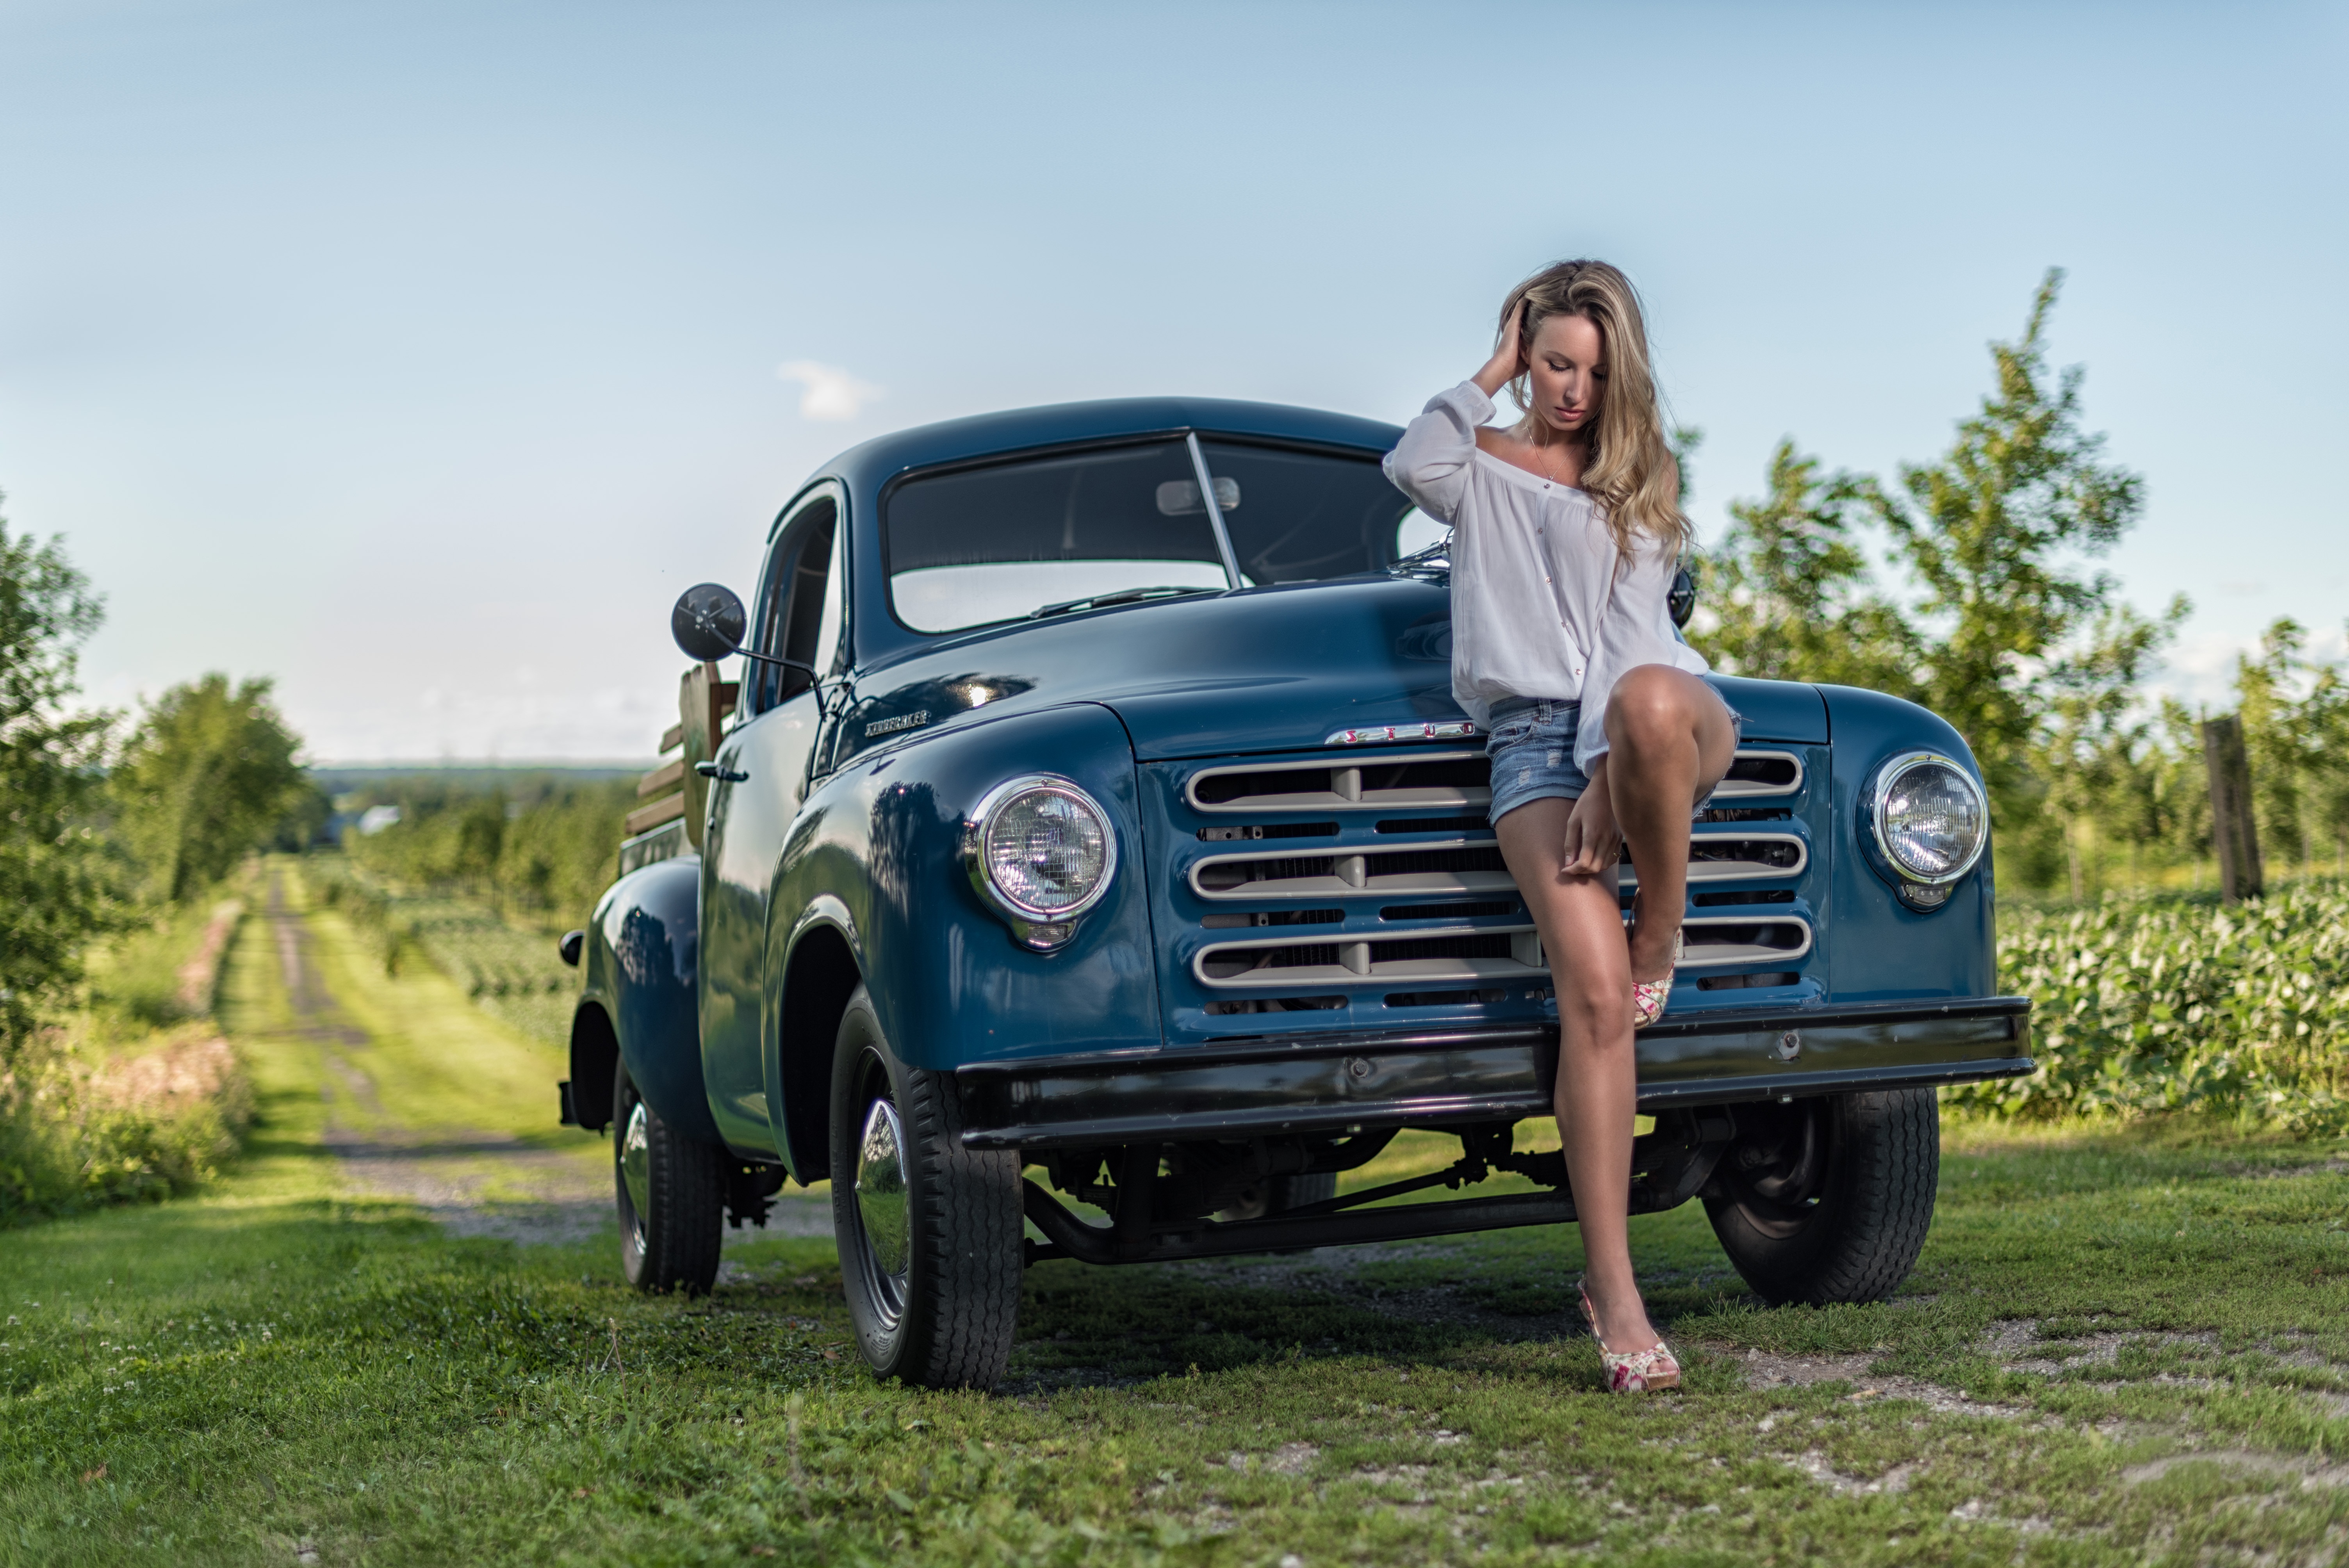 1920x1080 Background depth of field, studebaker, girls & cars, women, blonde, car, model, mood, shorts, vehicle